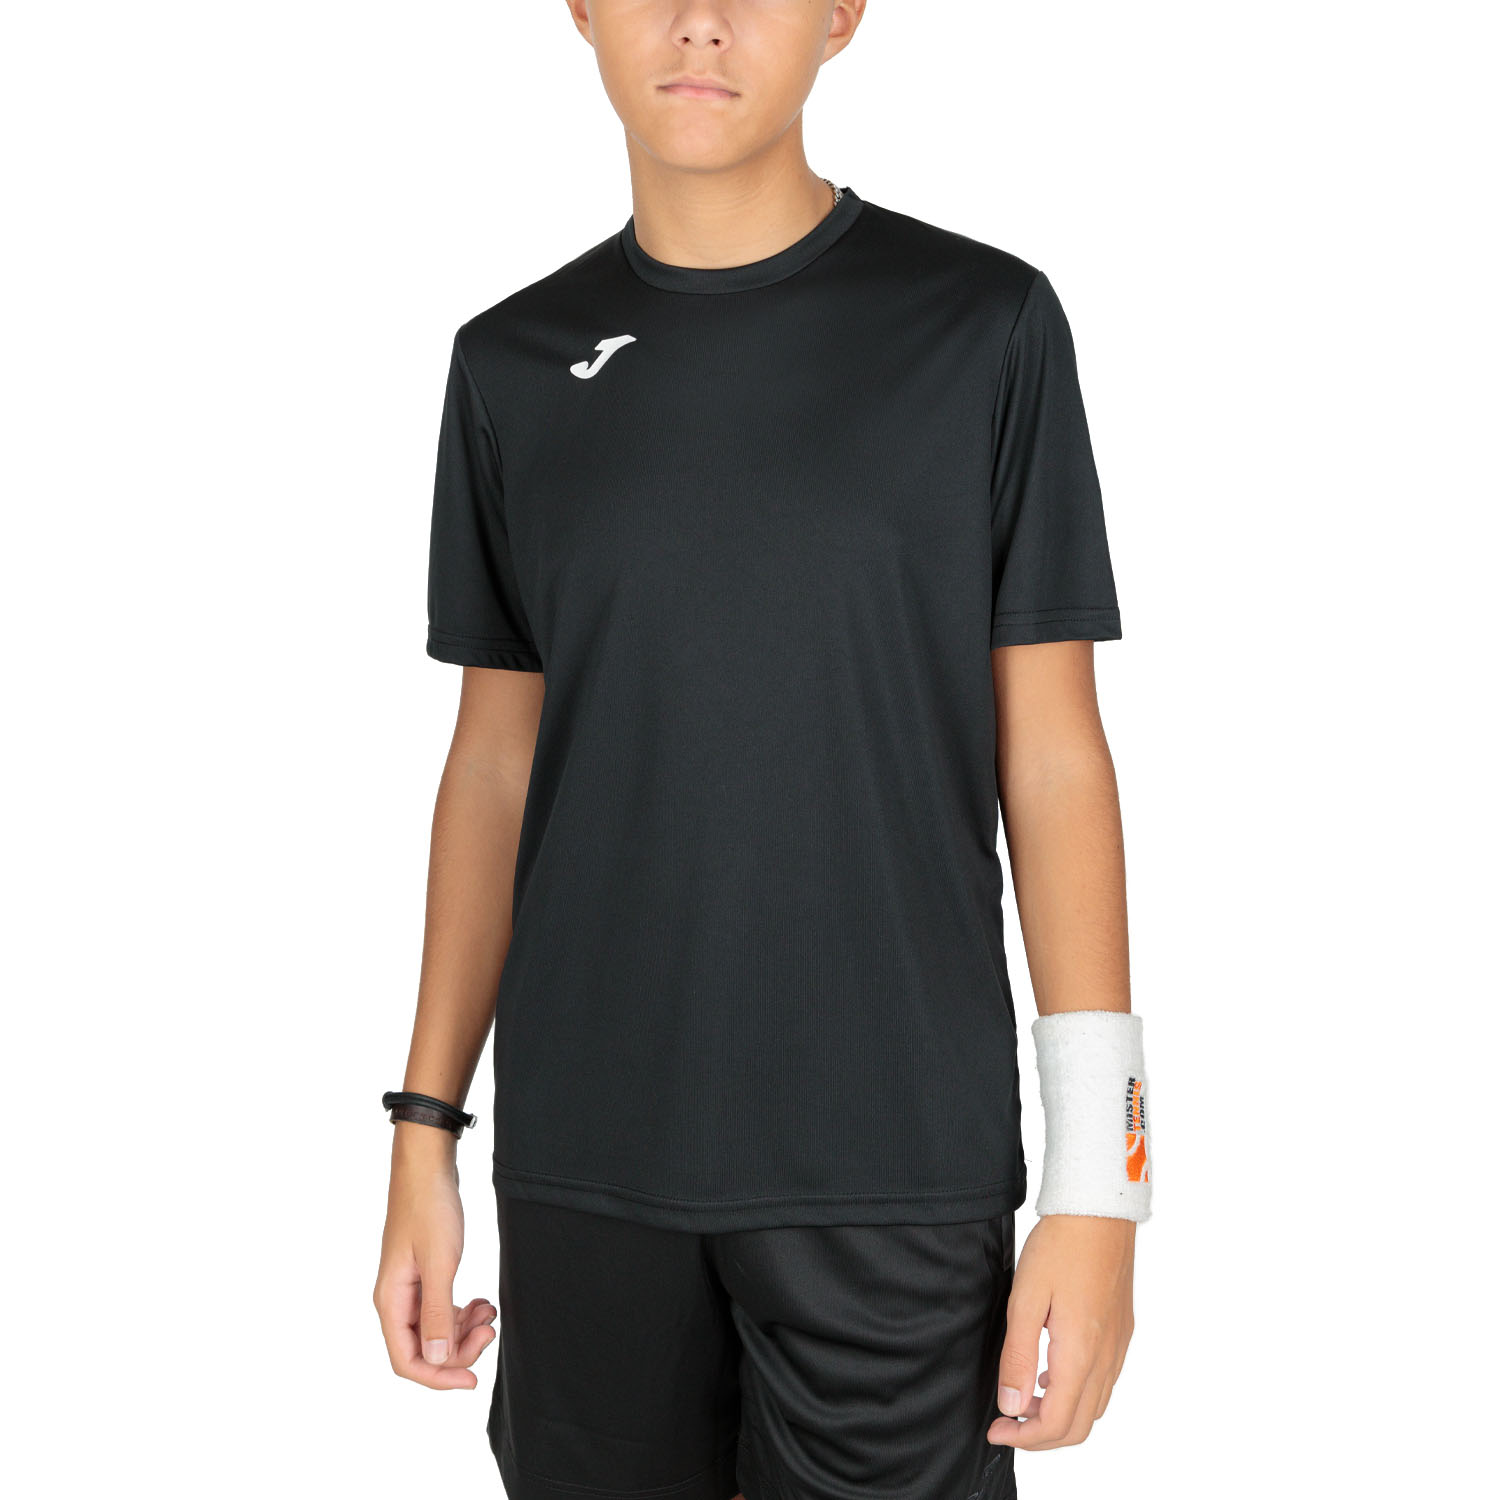 Joma Combi Camiseta Niño - Black/White